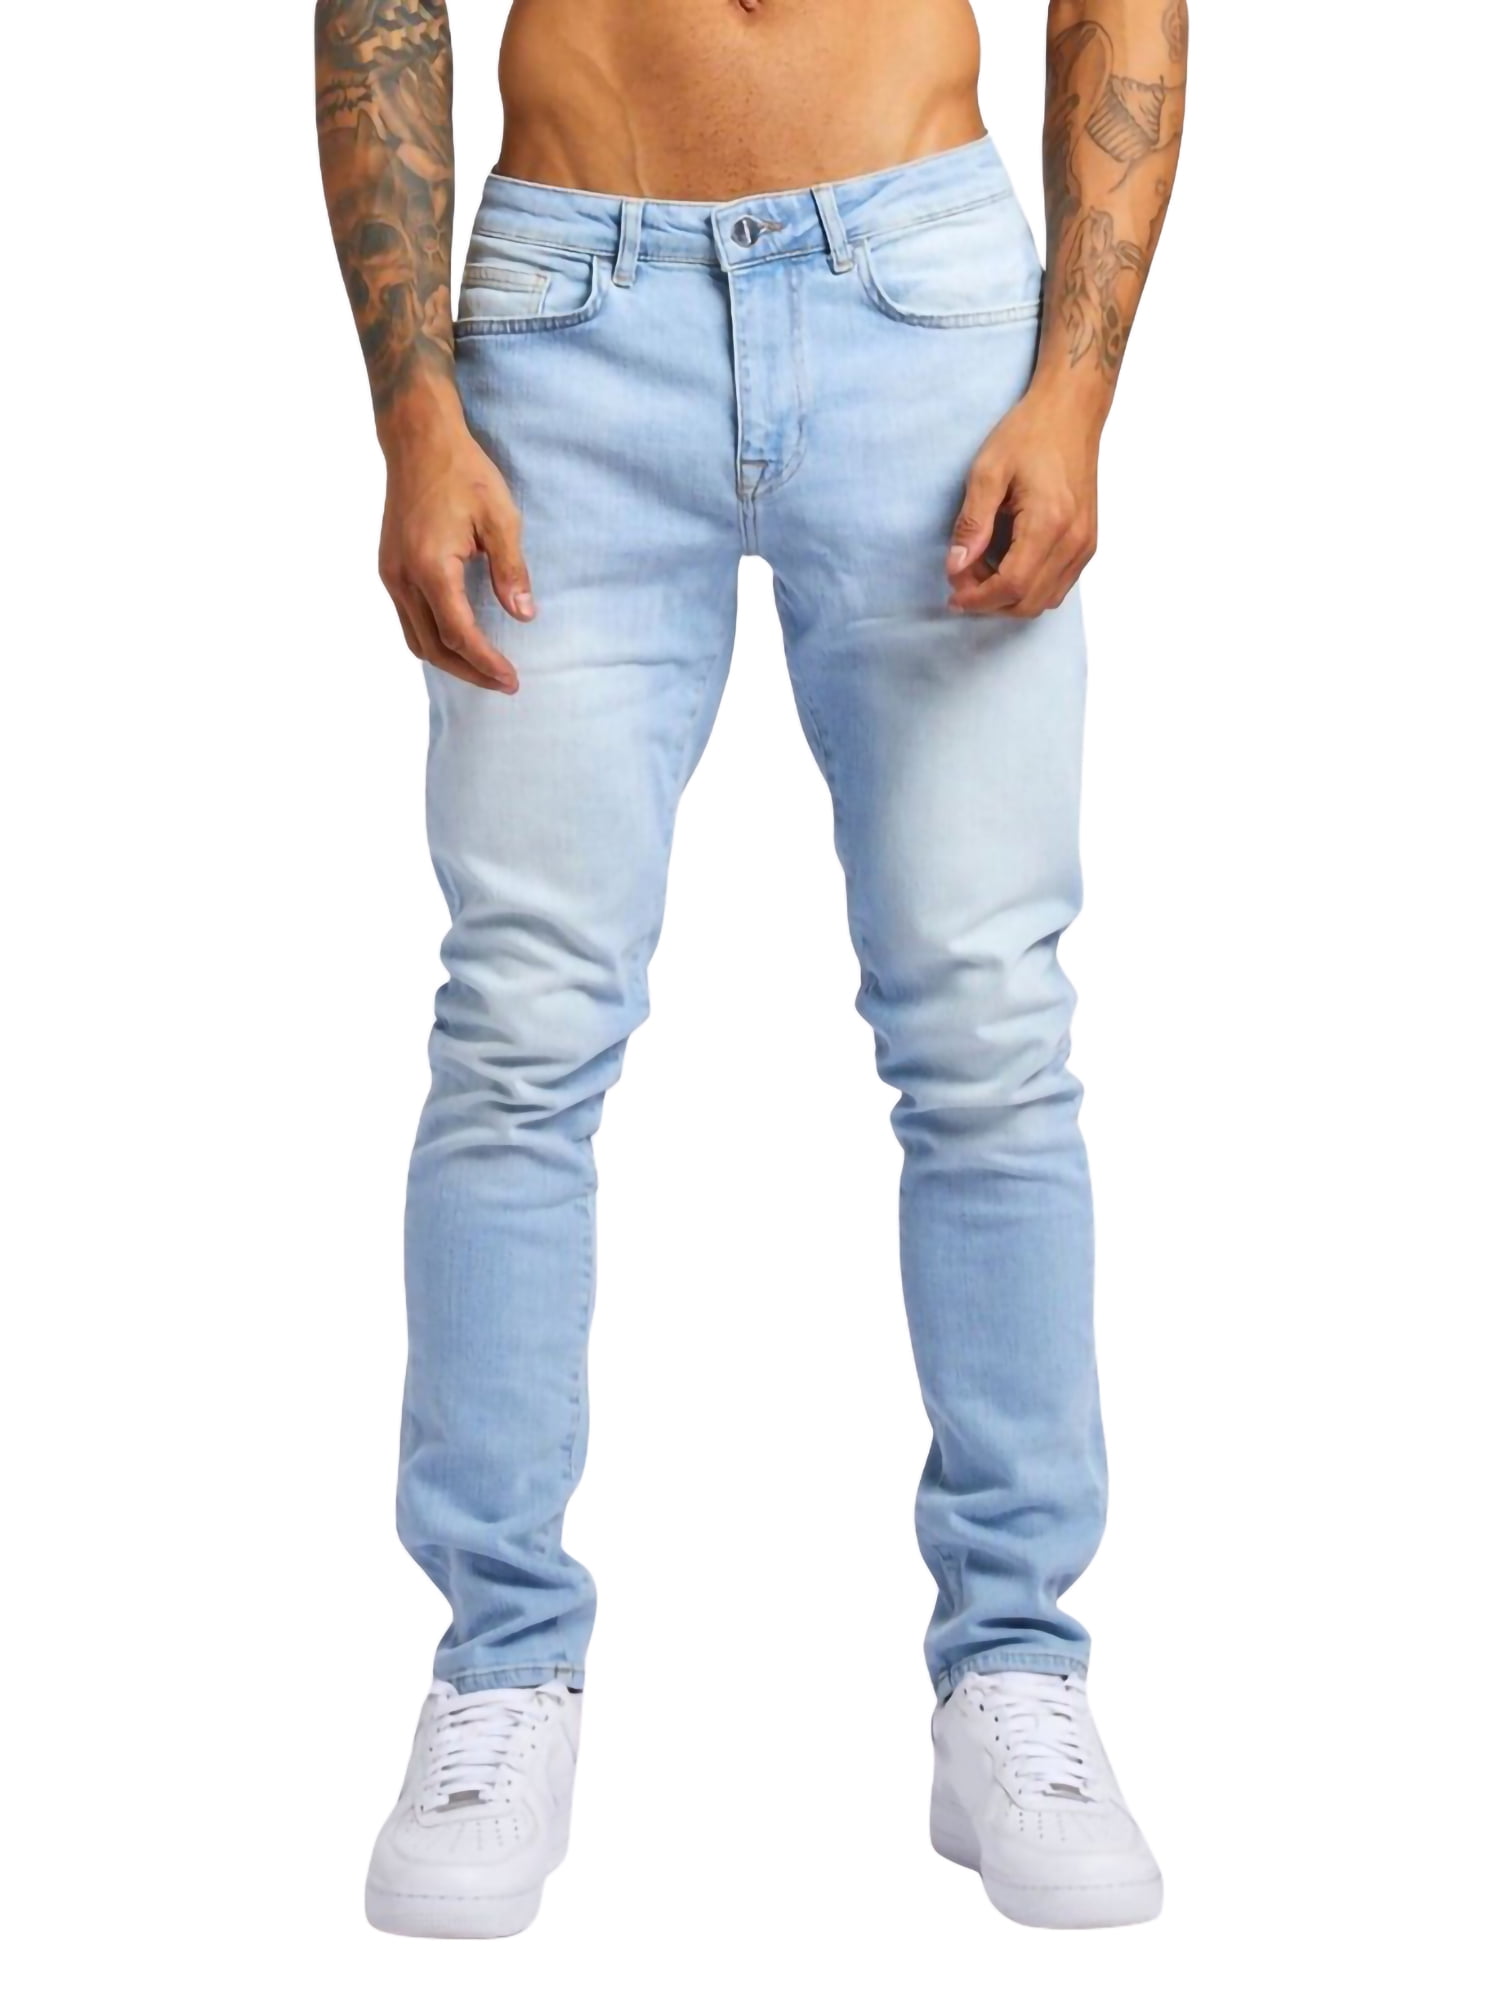 Men Skinny Jeans, Fashion Solid Low-Waist Slim-Fit Denim Pants Streetwear, Light Blue/Black - Walmart.com